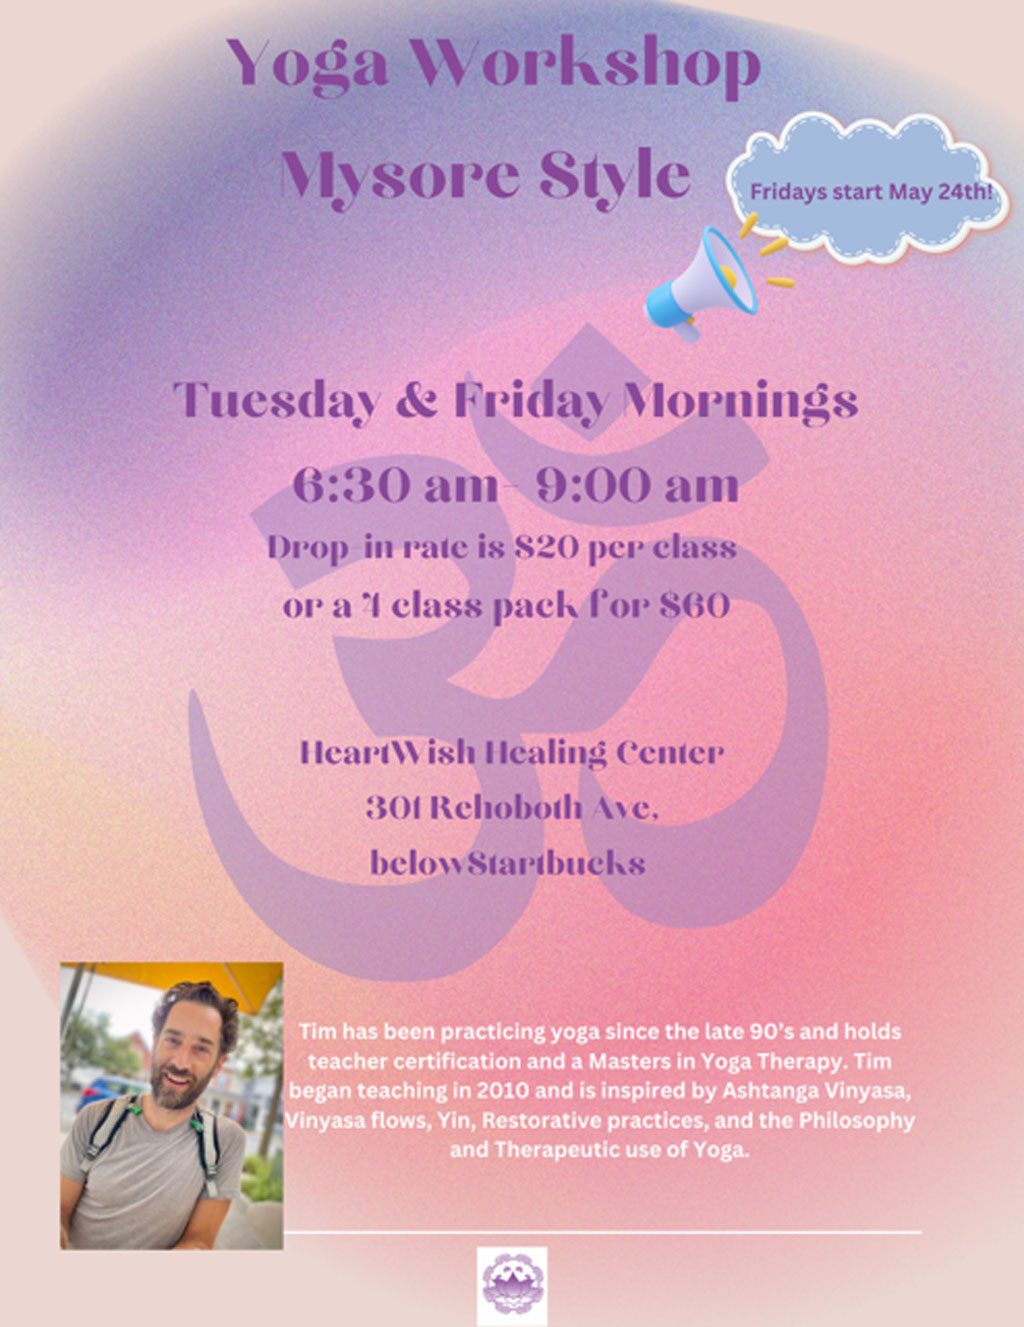 Tuesdays & Fridays Yoga Workshop Mysore Style